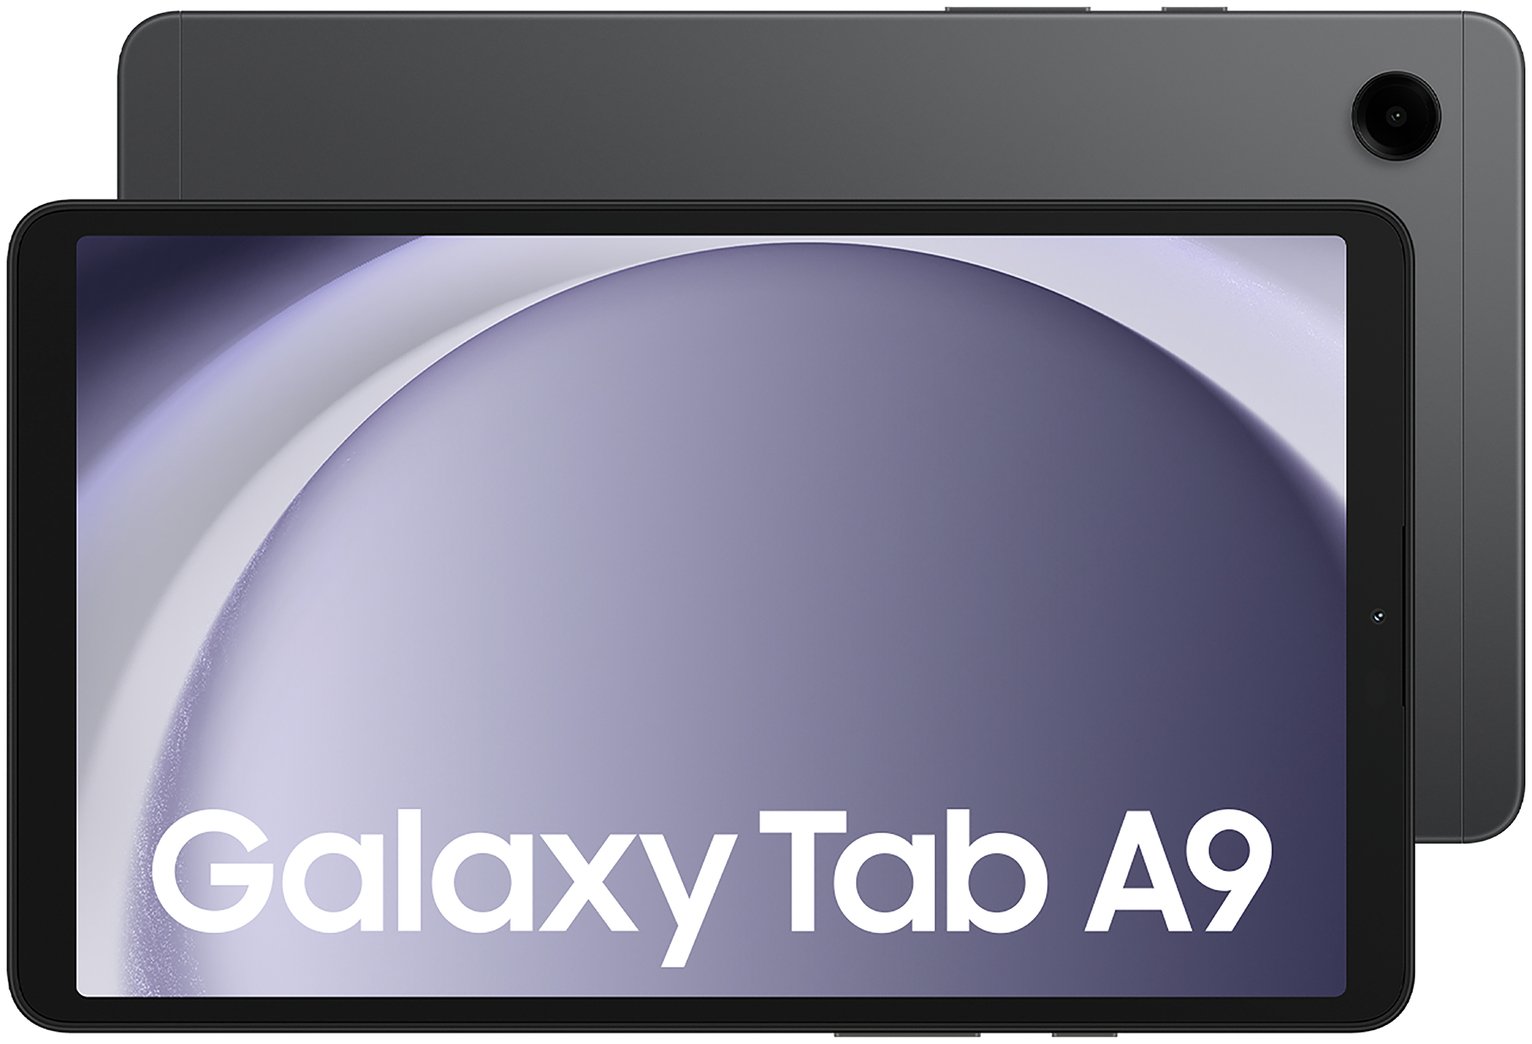 Upcoming Samsung Galaxy Tab A9+ Has A 10.95-Inch Screen